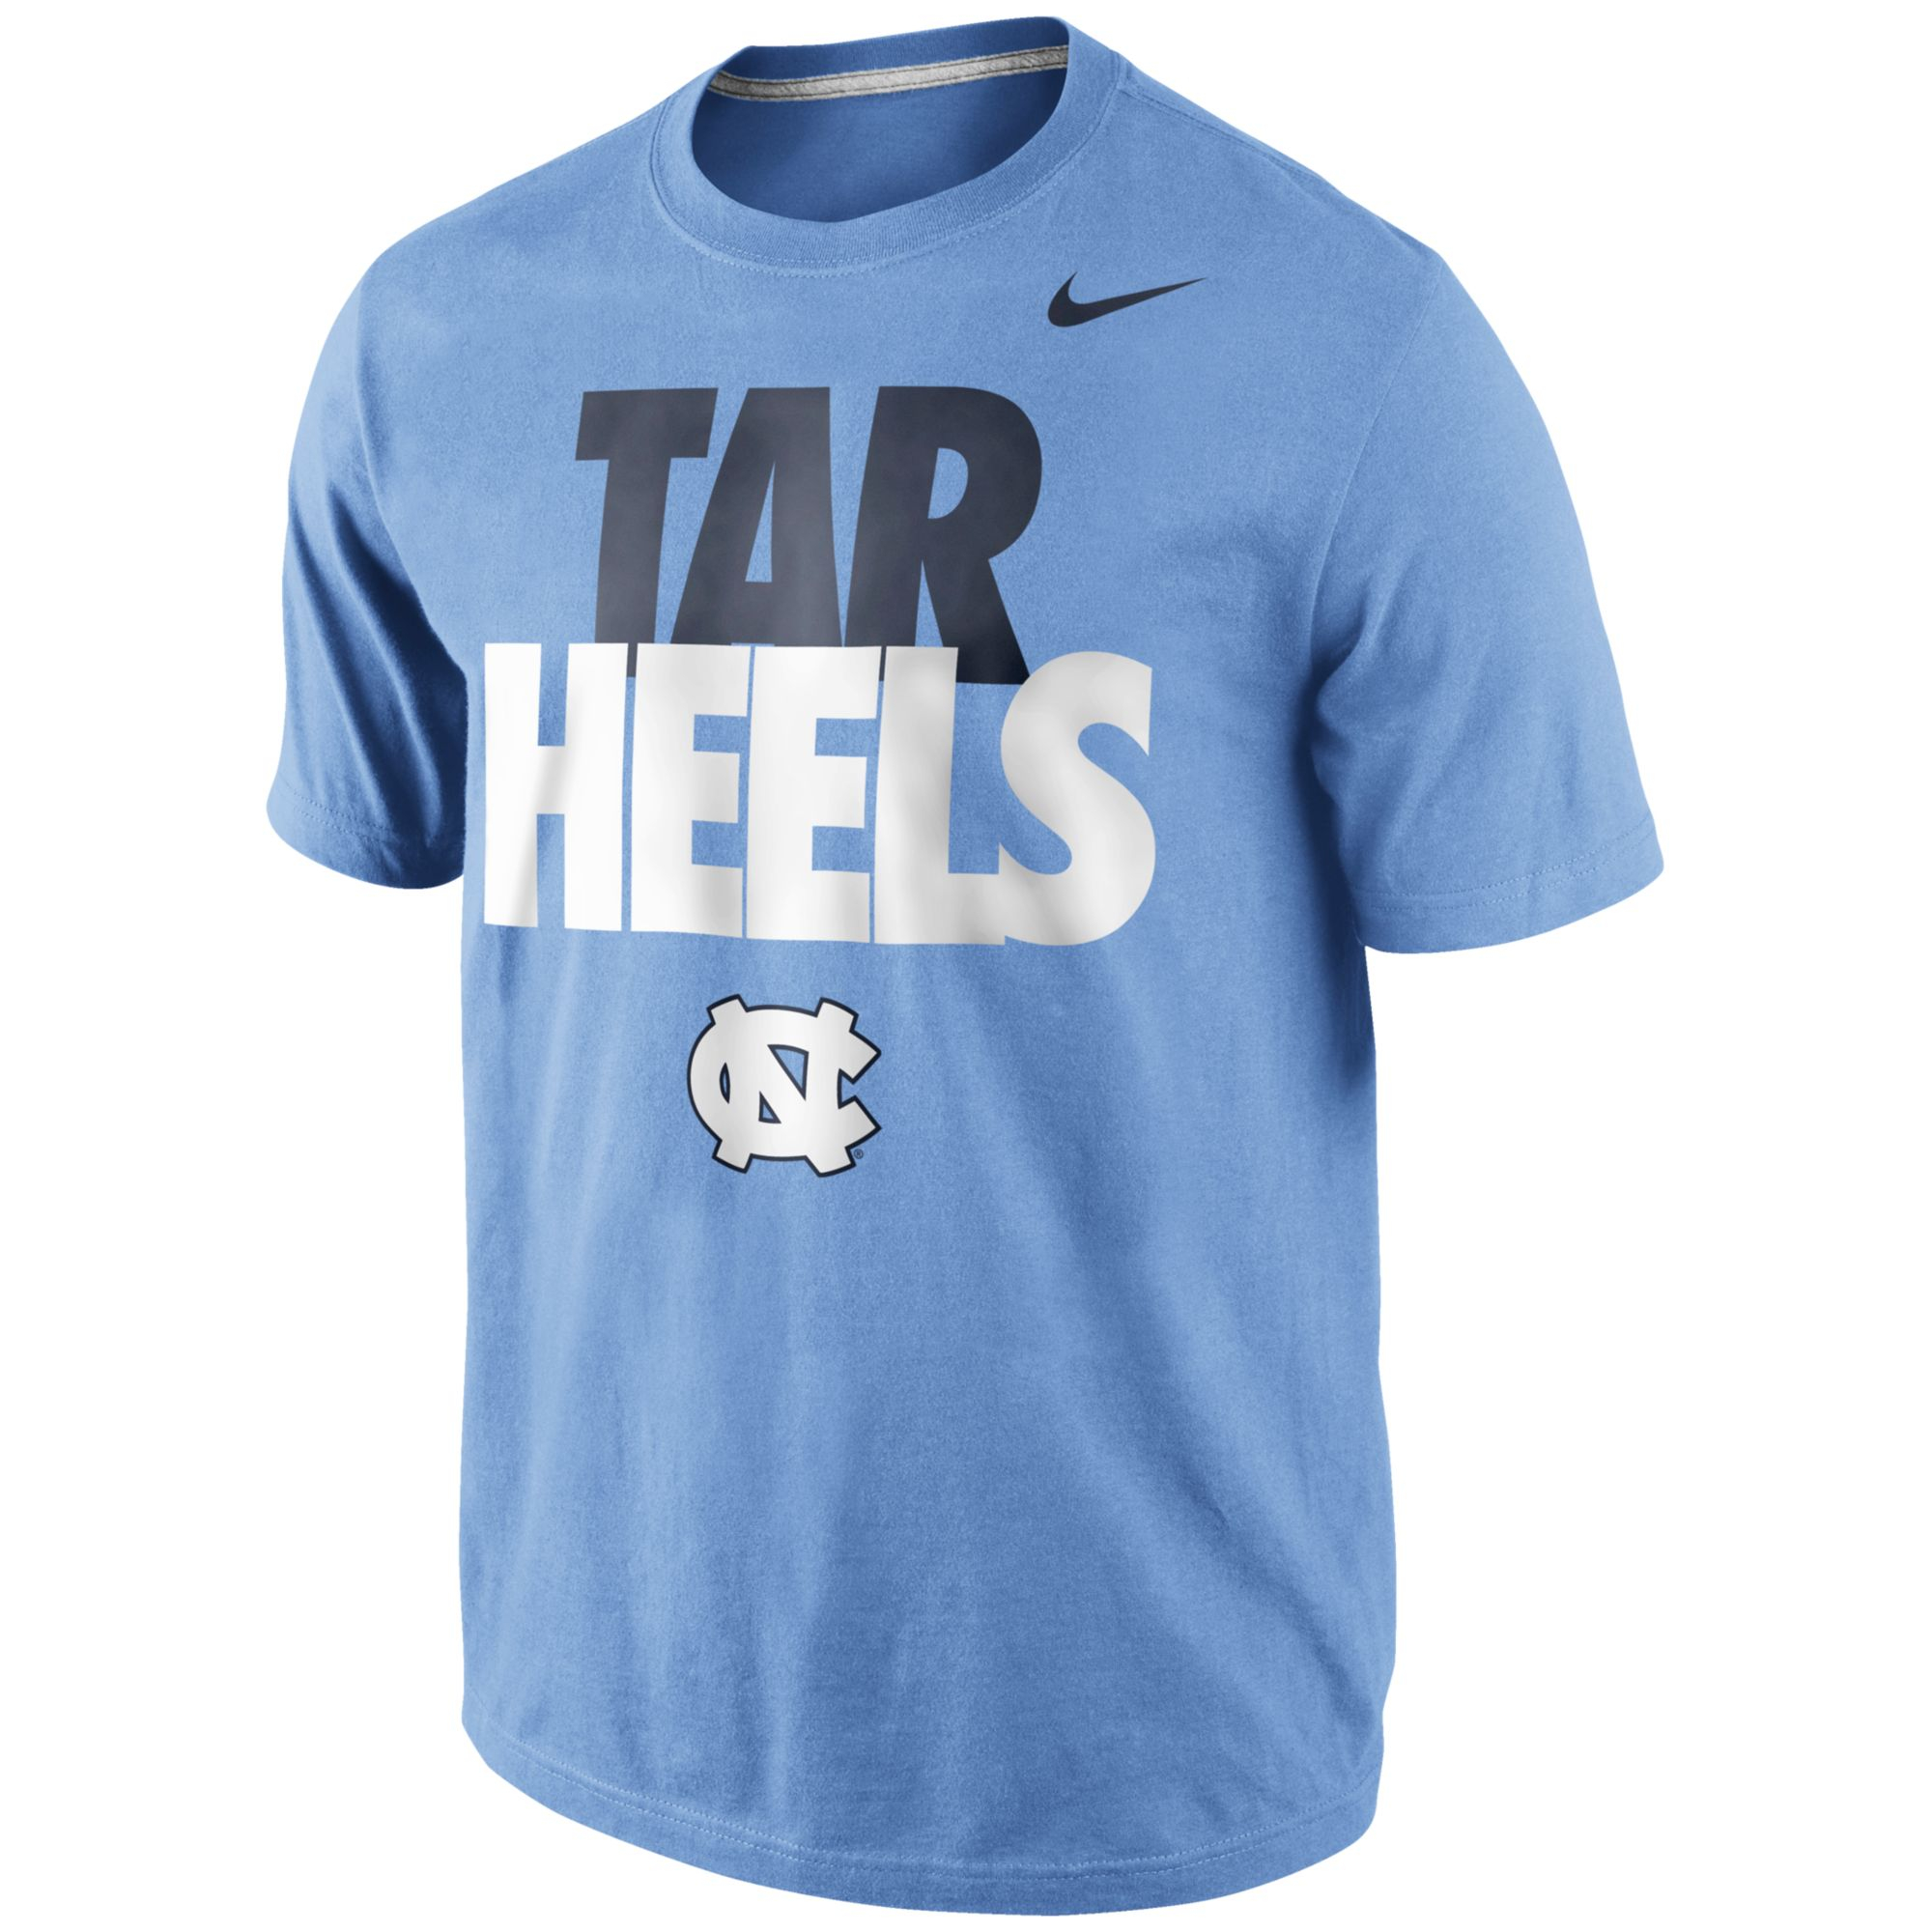 Lyst - Nike Mens Short Sleeve North Carolina Tar Heels Tshirt in Blue ...